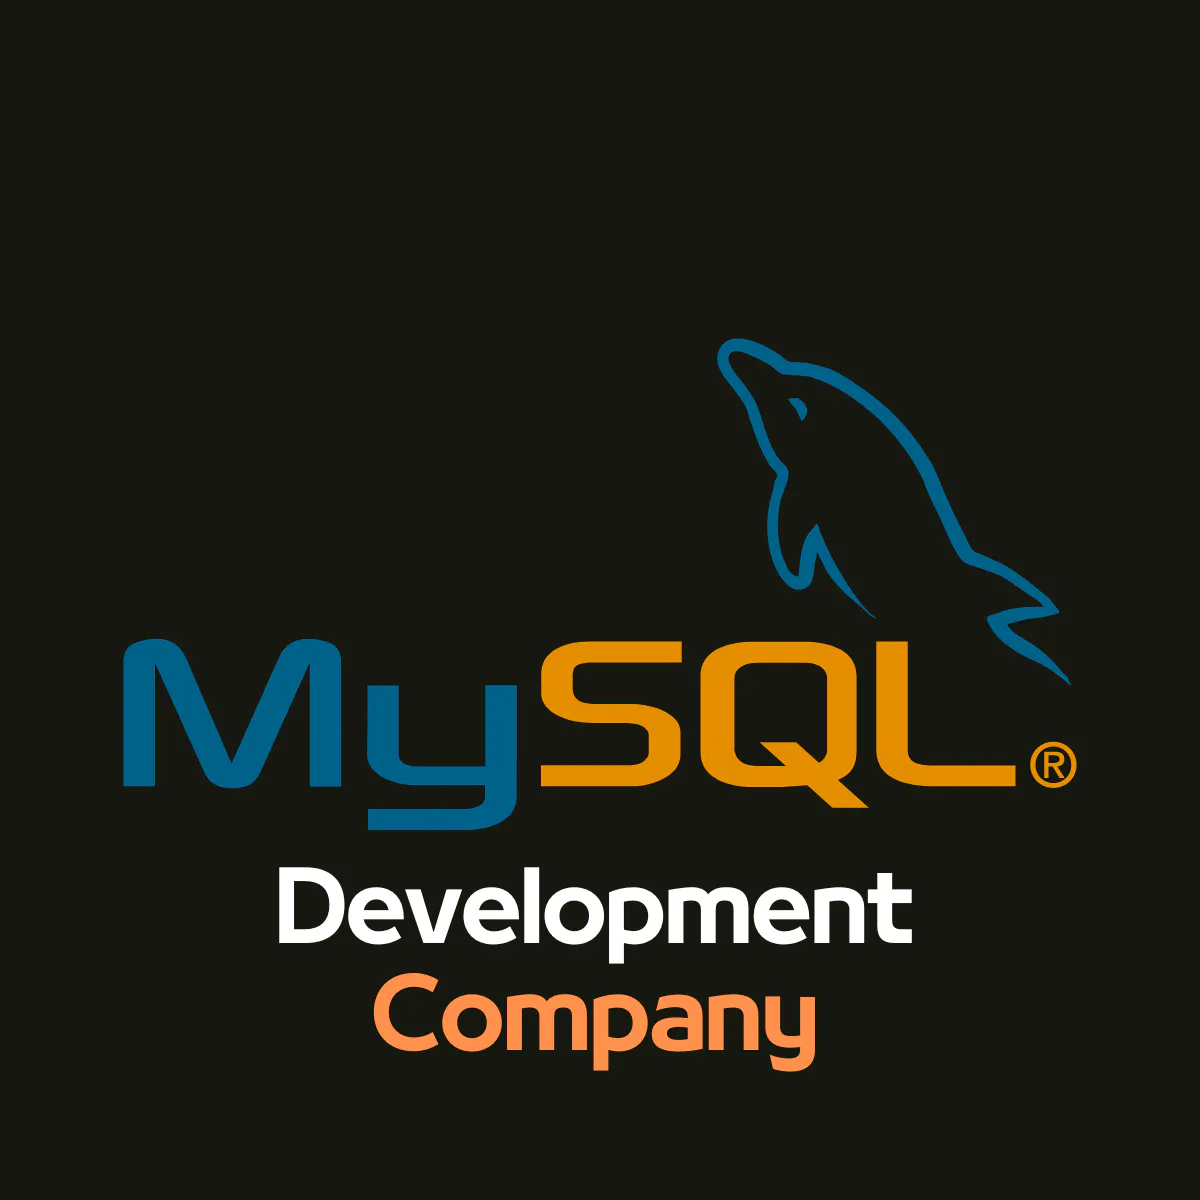 MySql Development